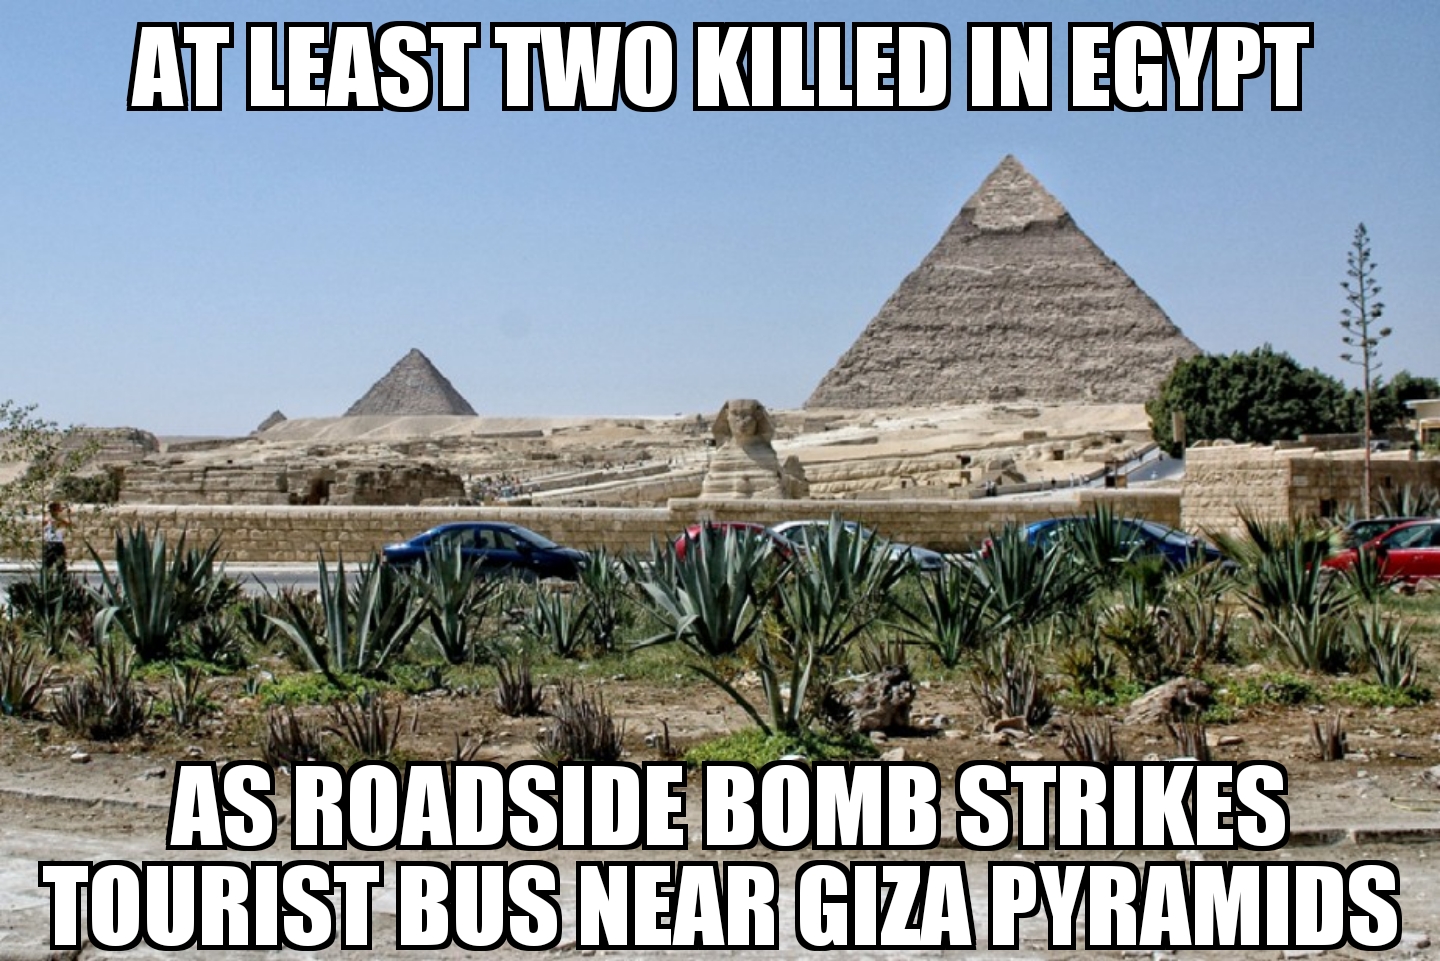 Bombing near Giza pyramids